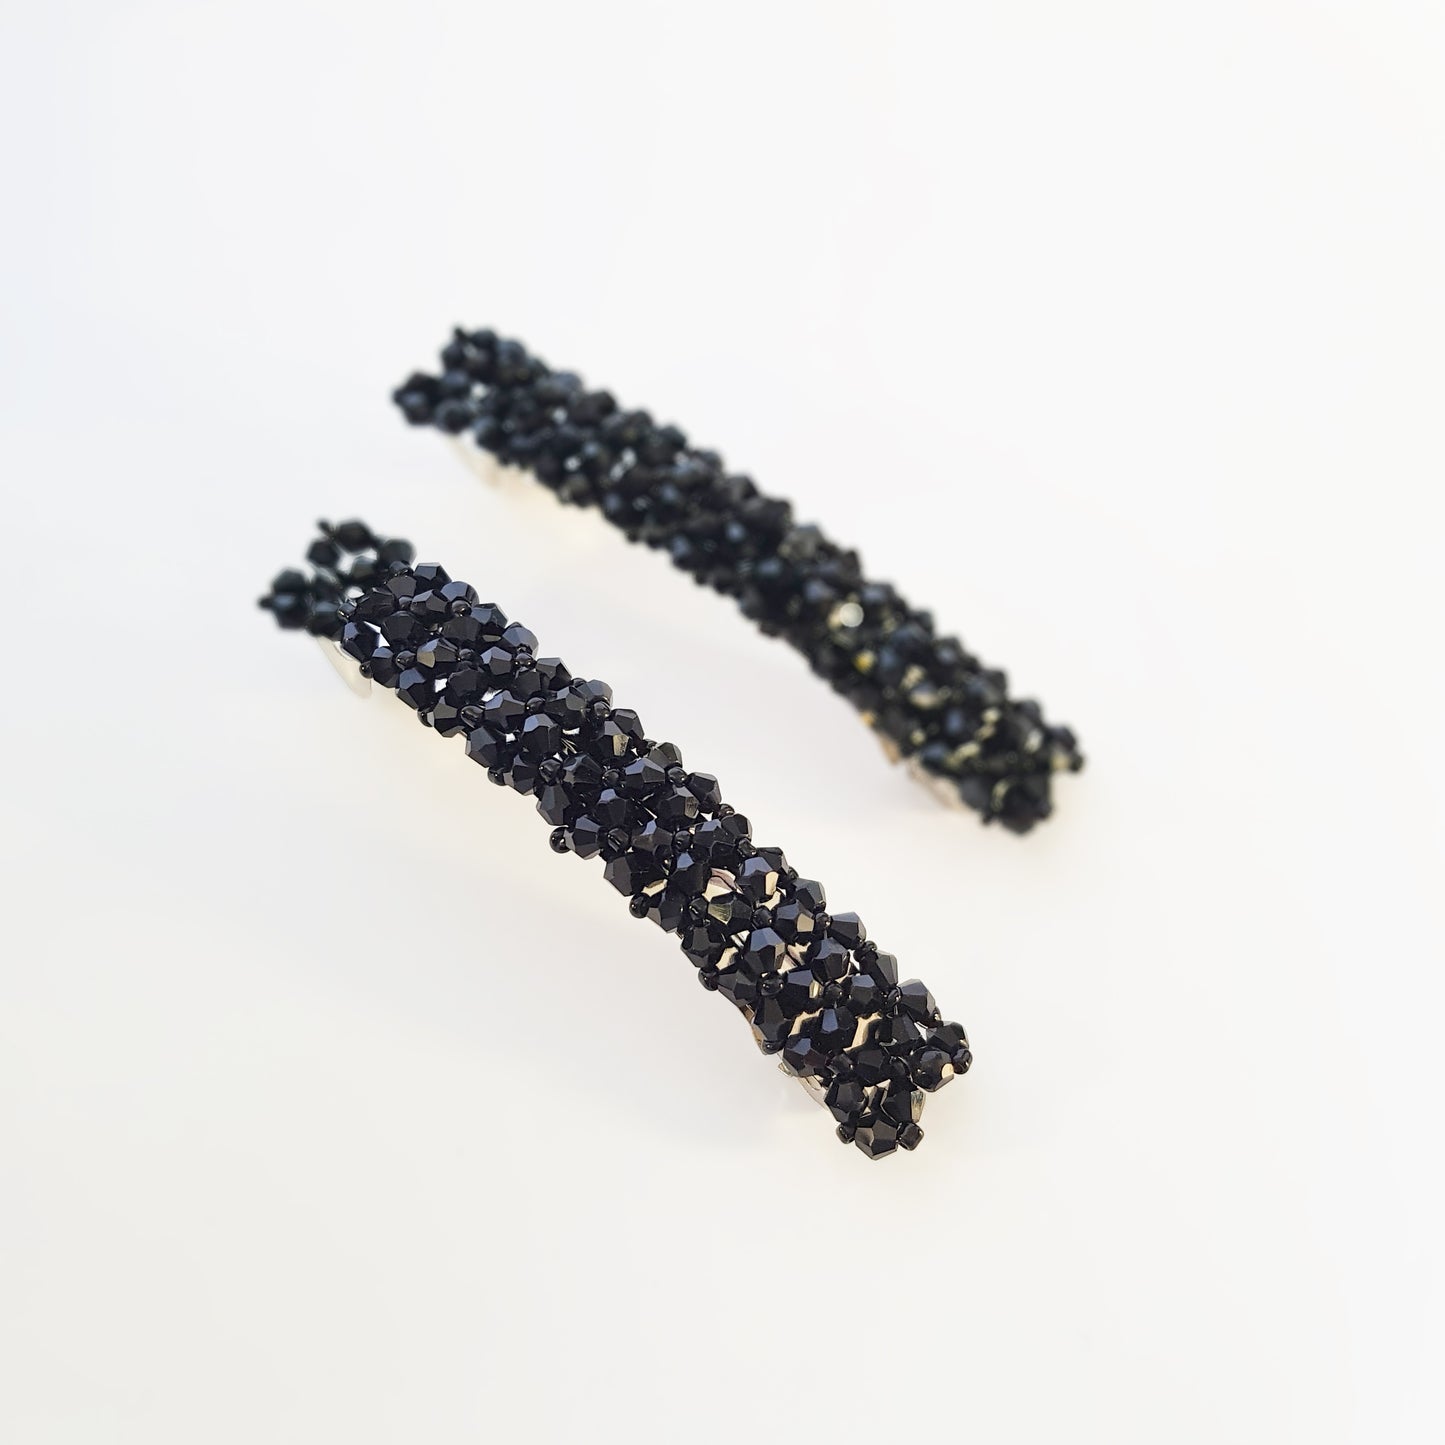 Sequin barrette hair clips in black